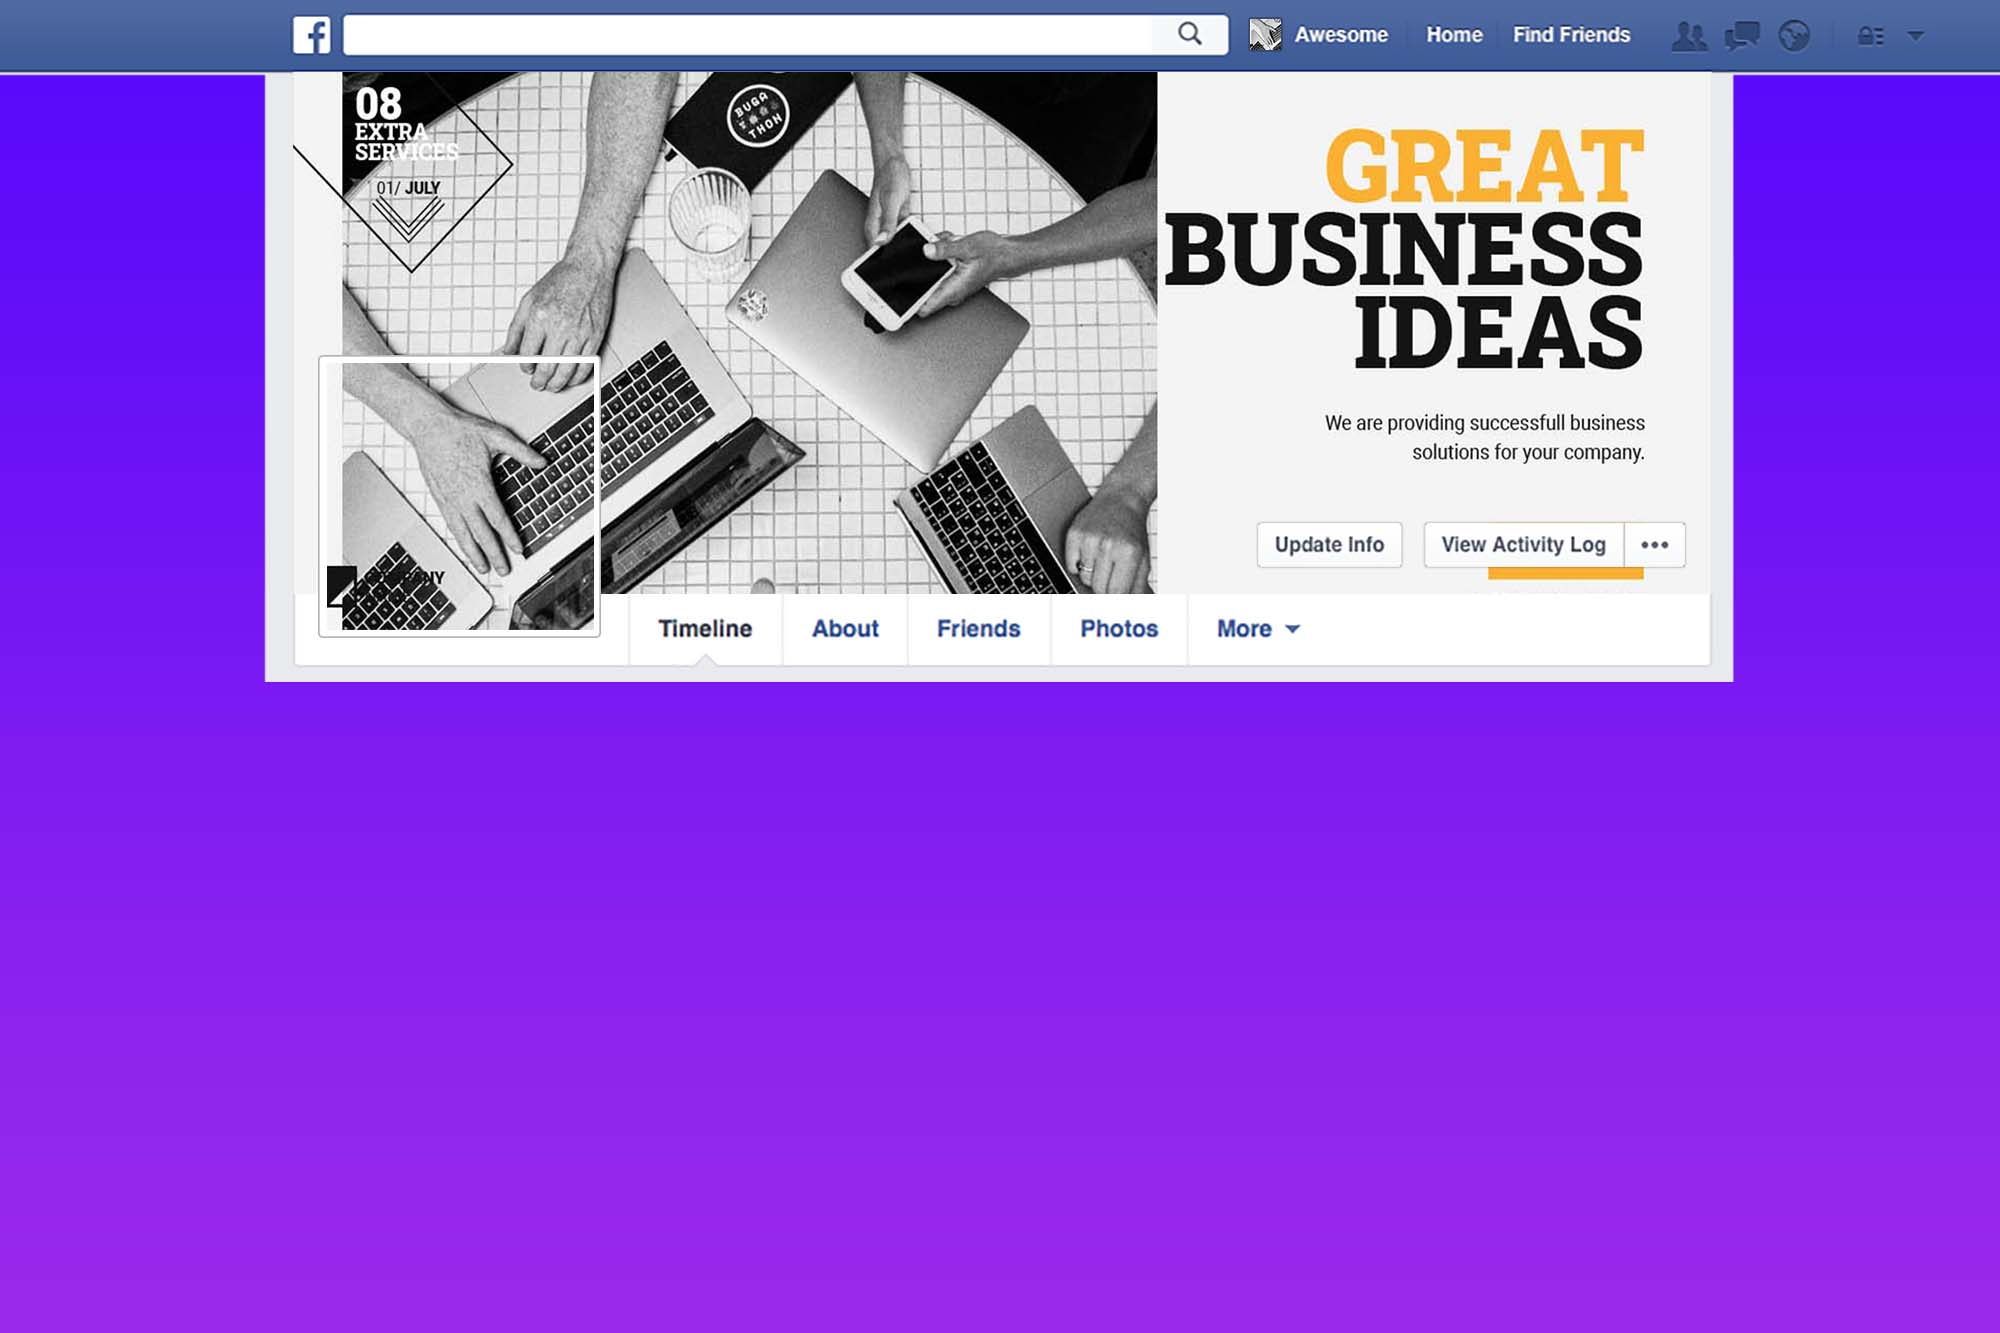 Free Business Idea fb cover